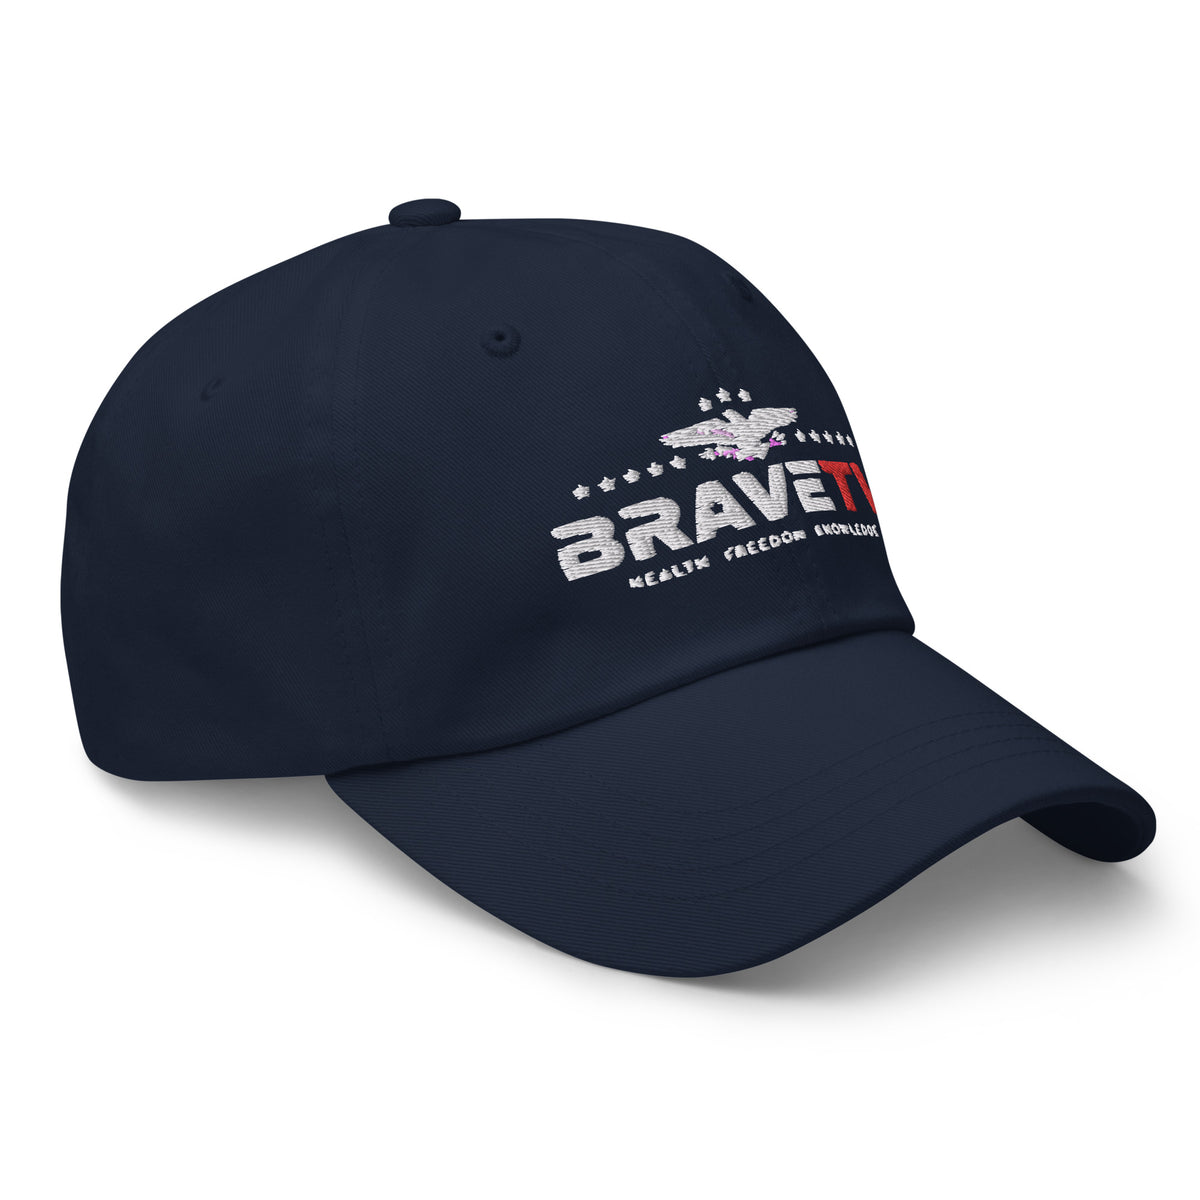 BraveTV embroidered Dad hat